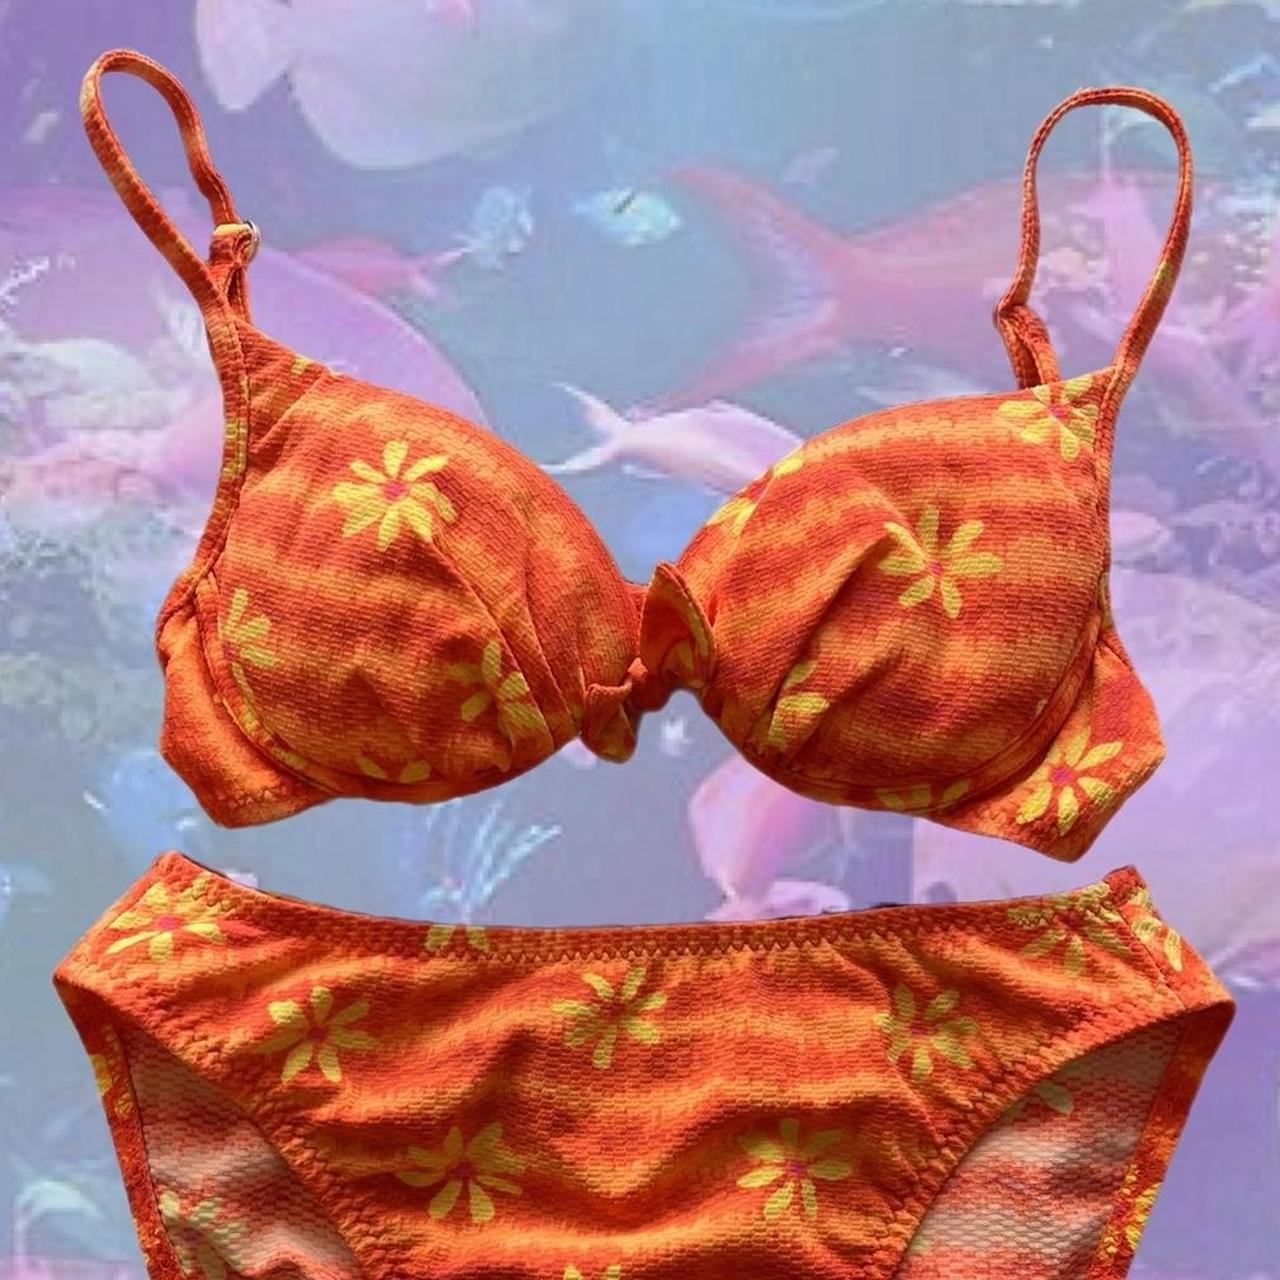 California Waves Women's Orange and Yellow Bikinis-and-tankini-sets (2)